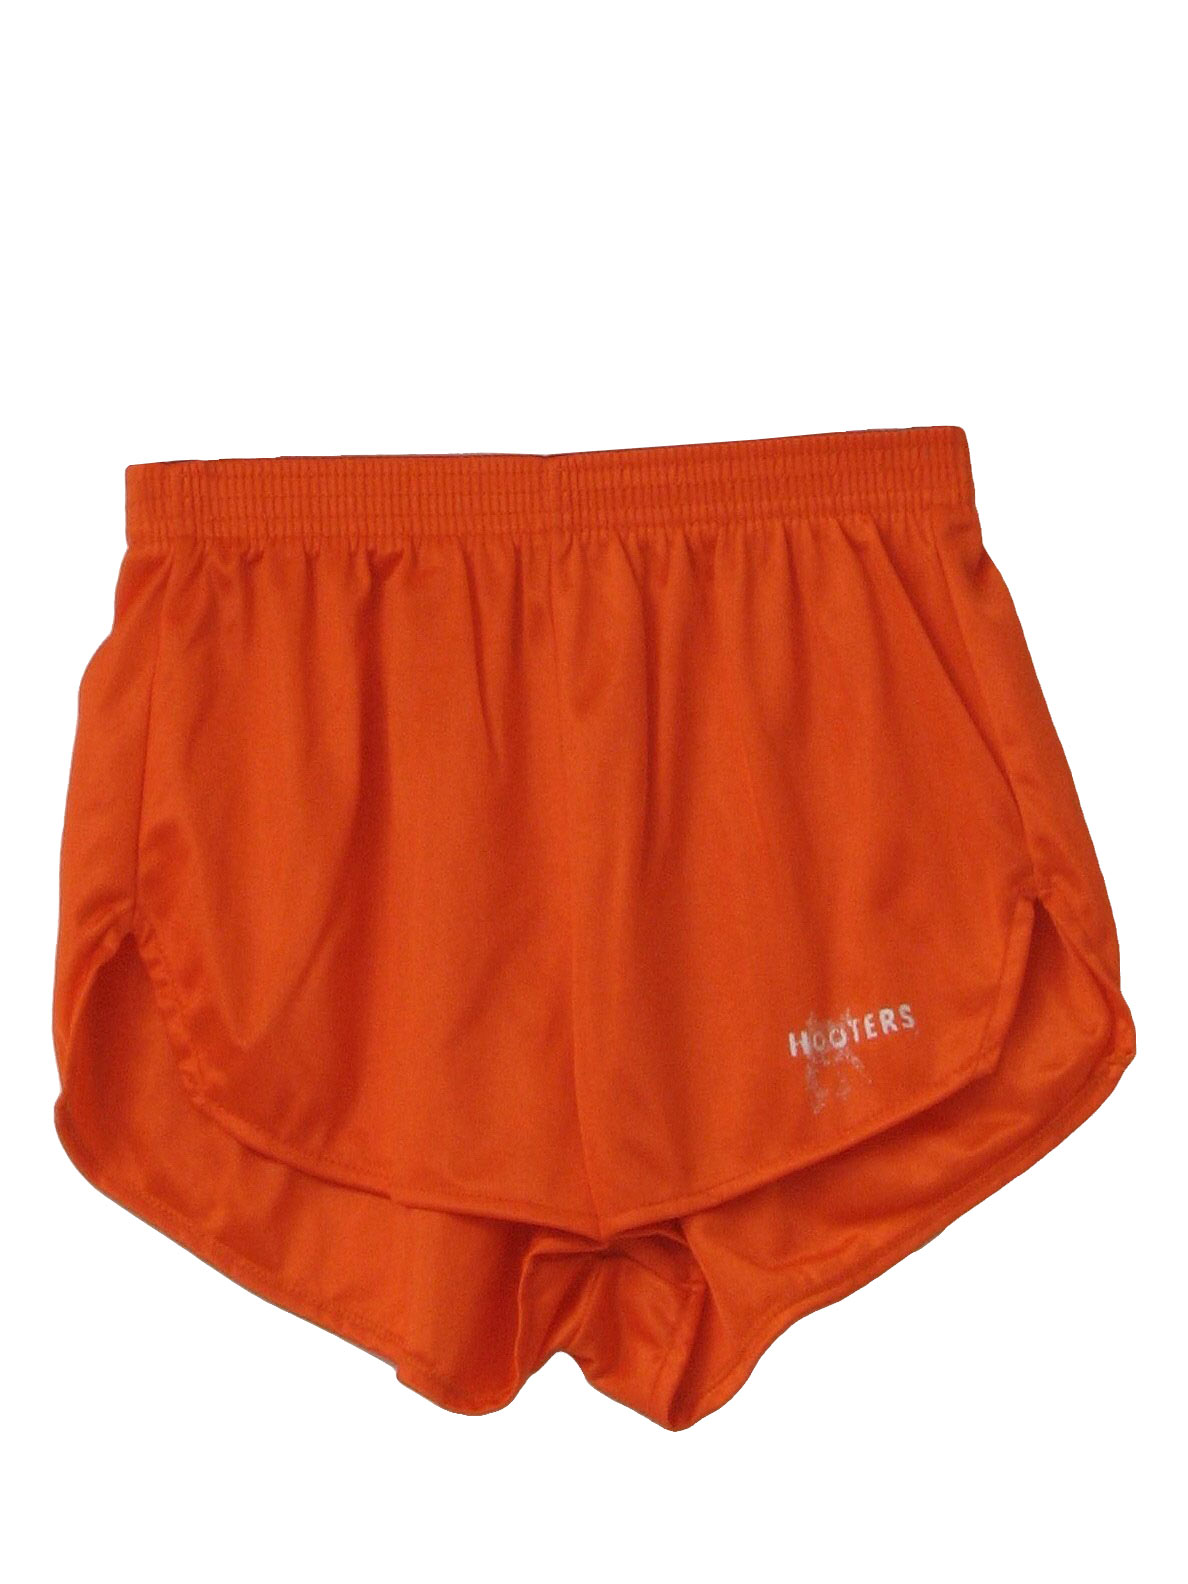 Womens Orange Shorts